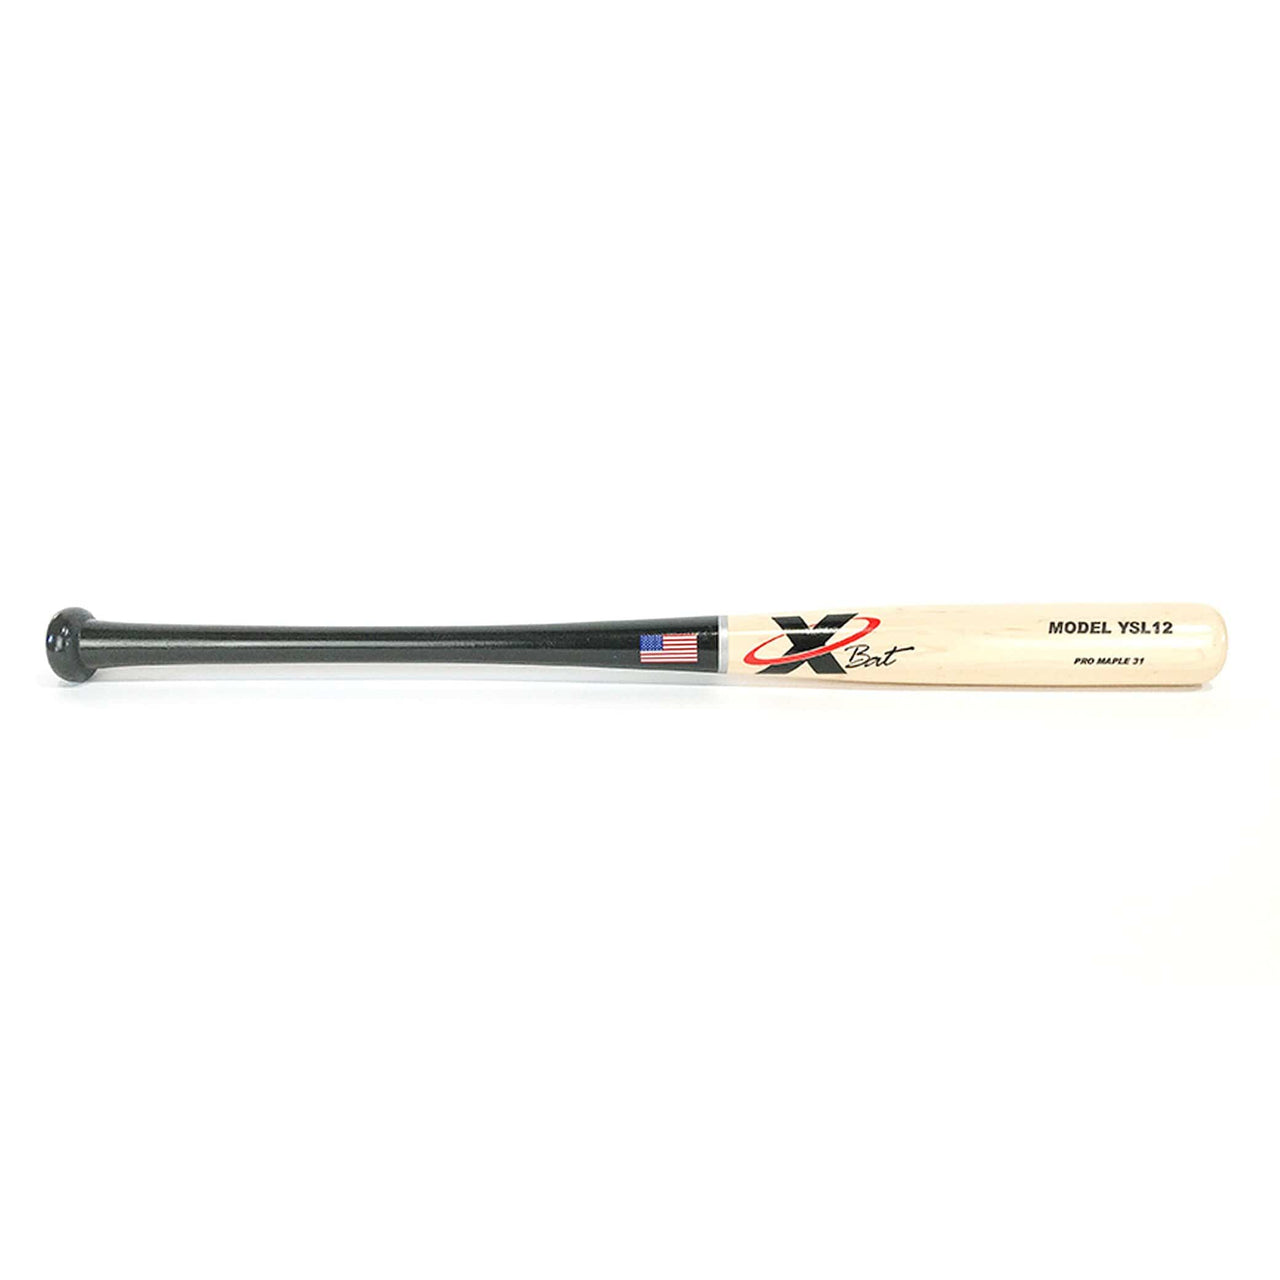 X-Bat Playing Bats X-Bat Model YSL12 Wood Baseball Bat | Maple